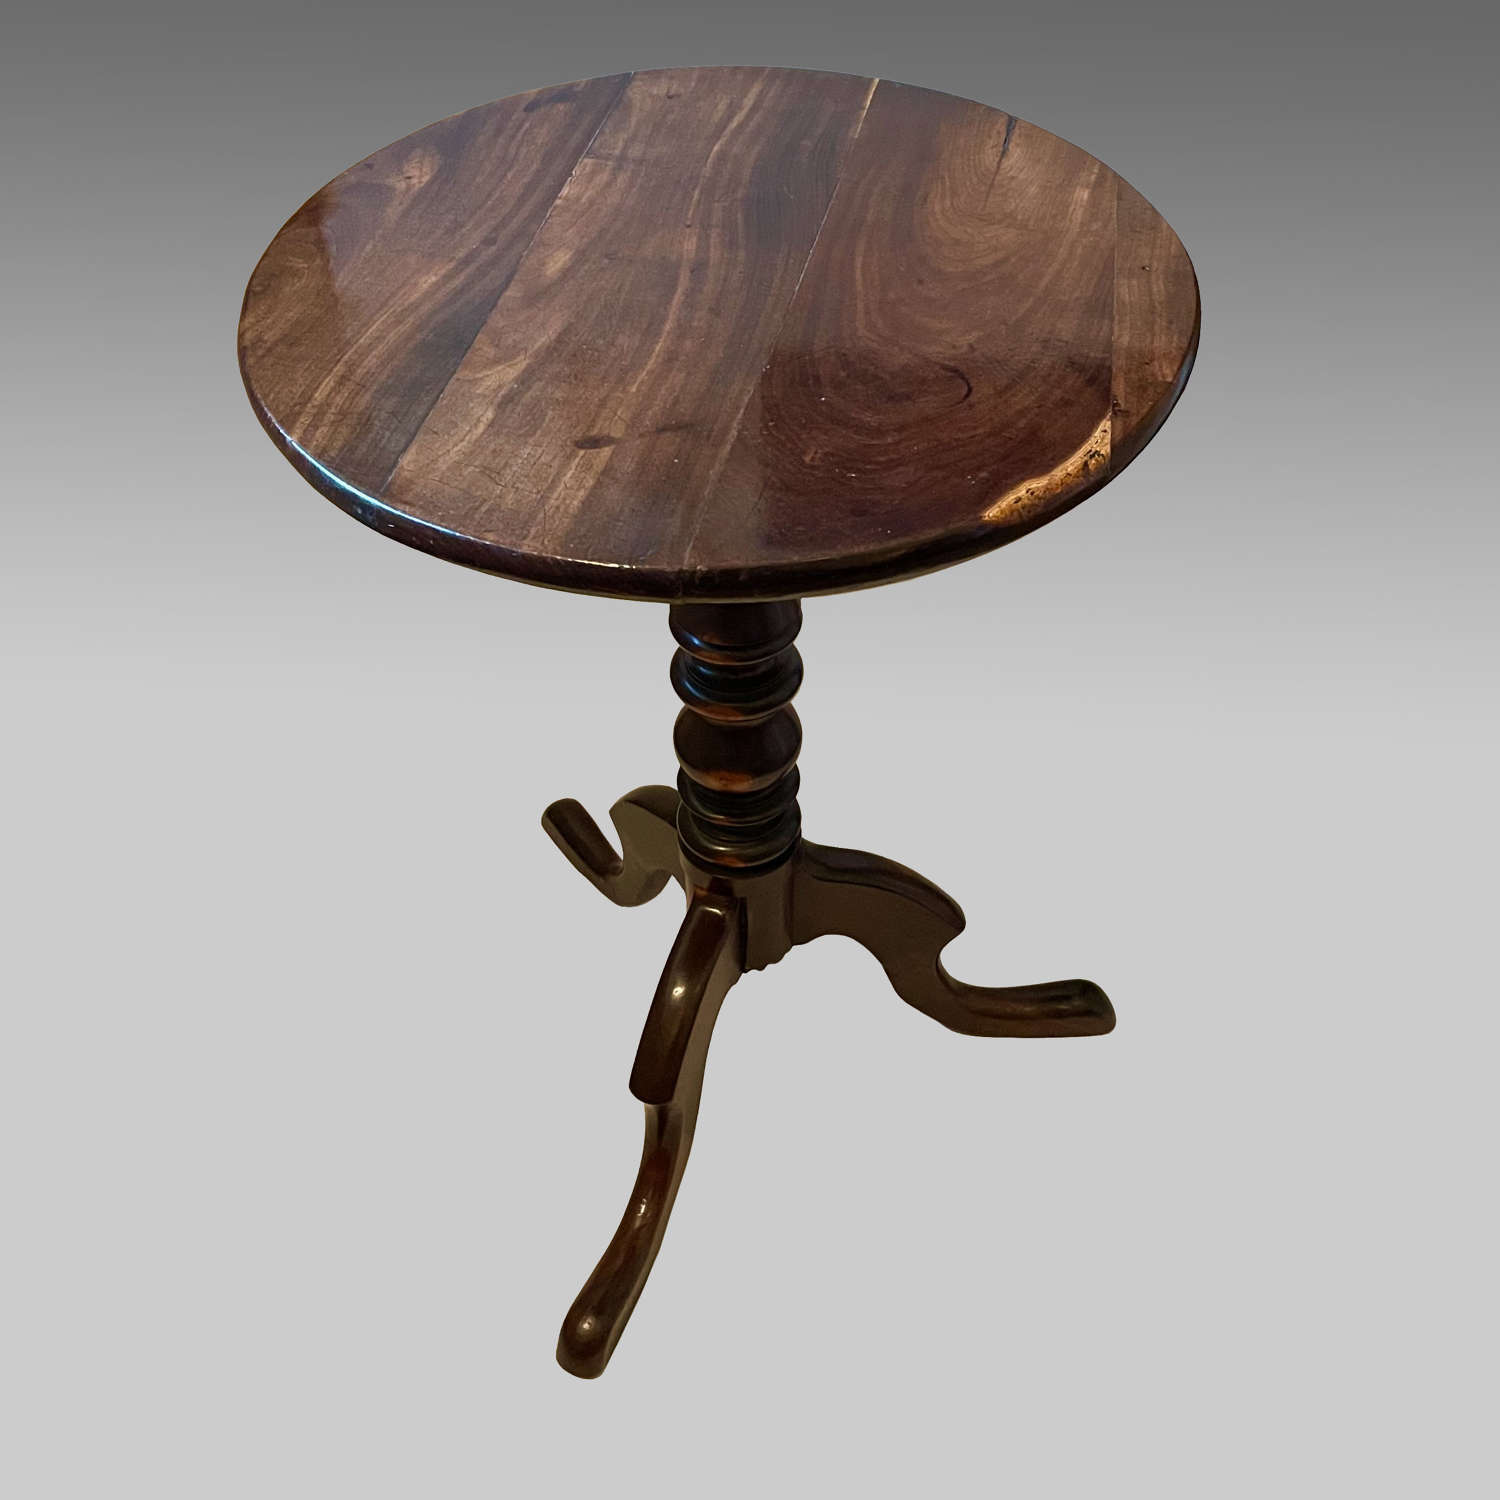 Scottish 19th century laburnum tripod table